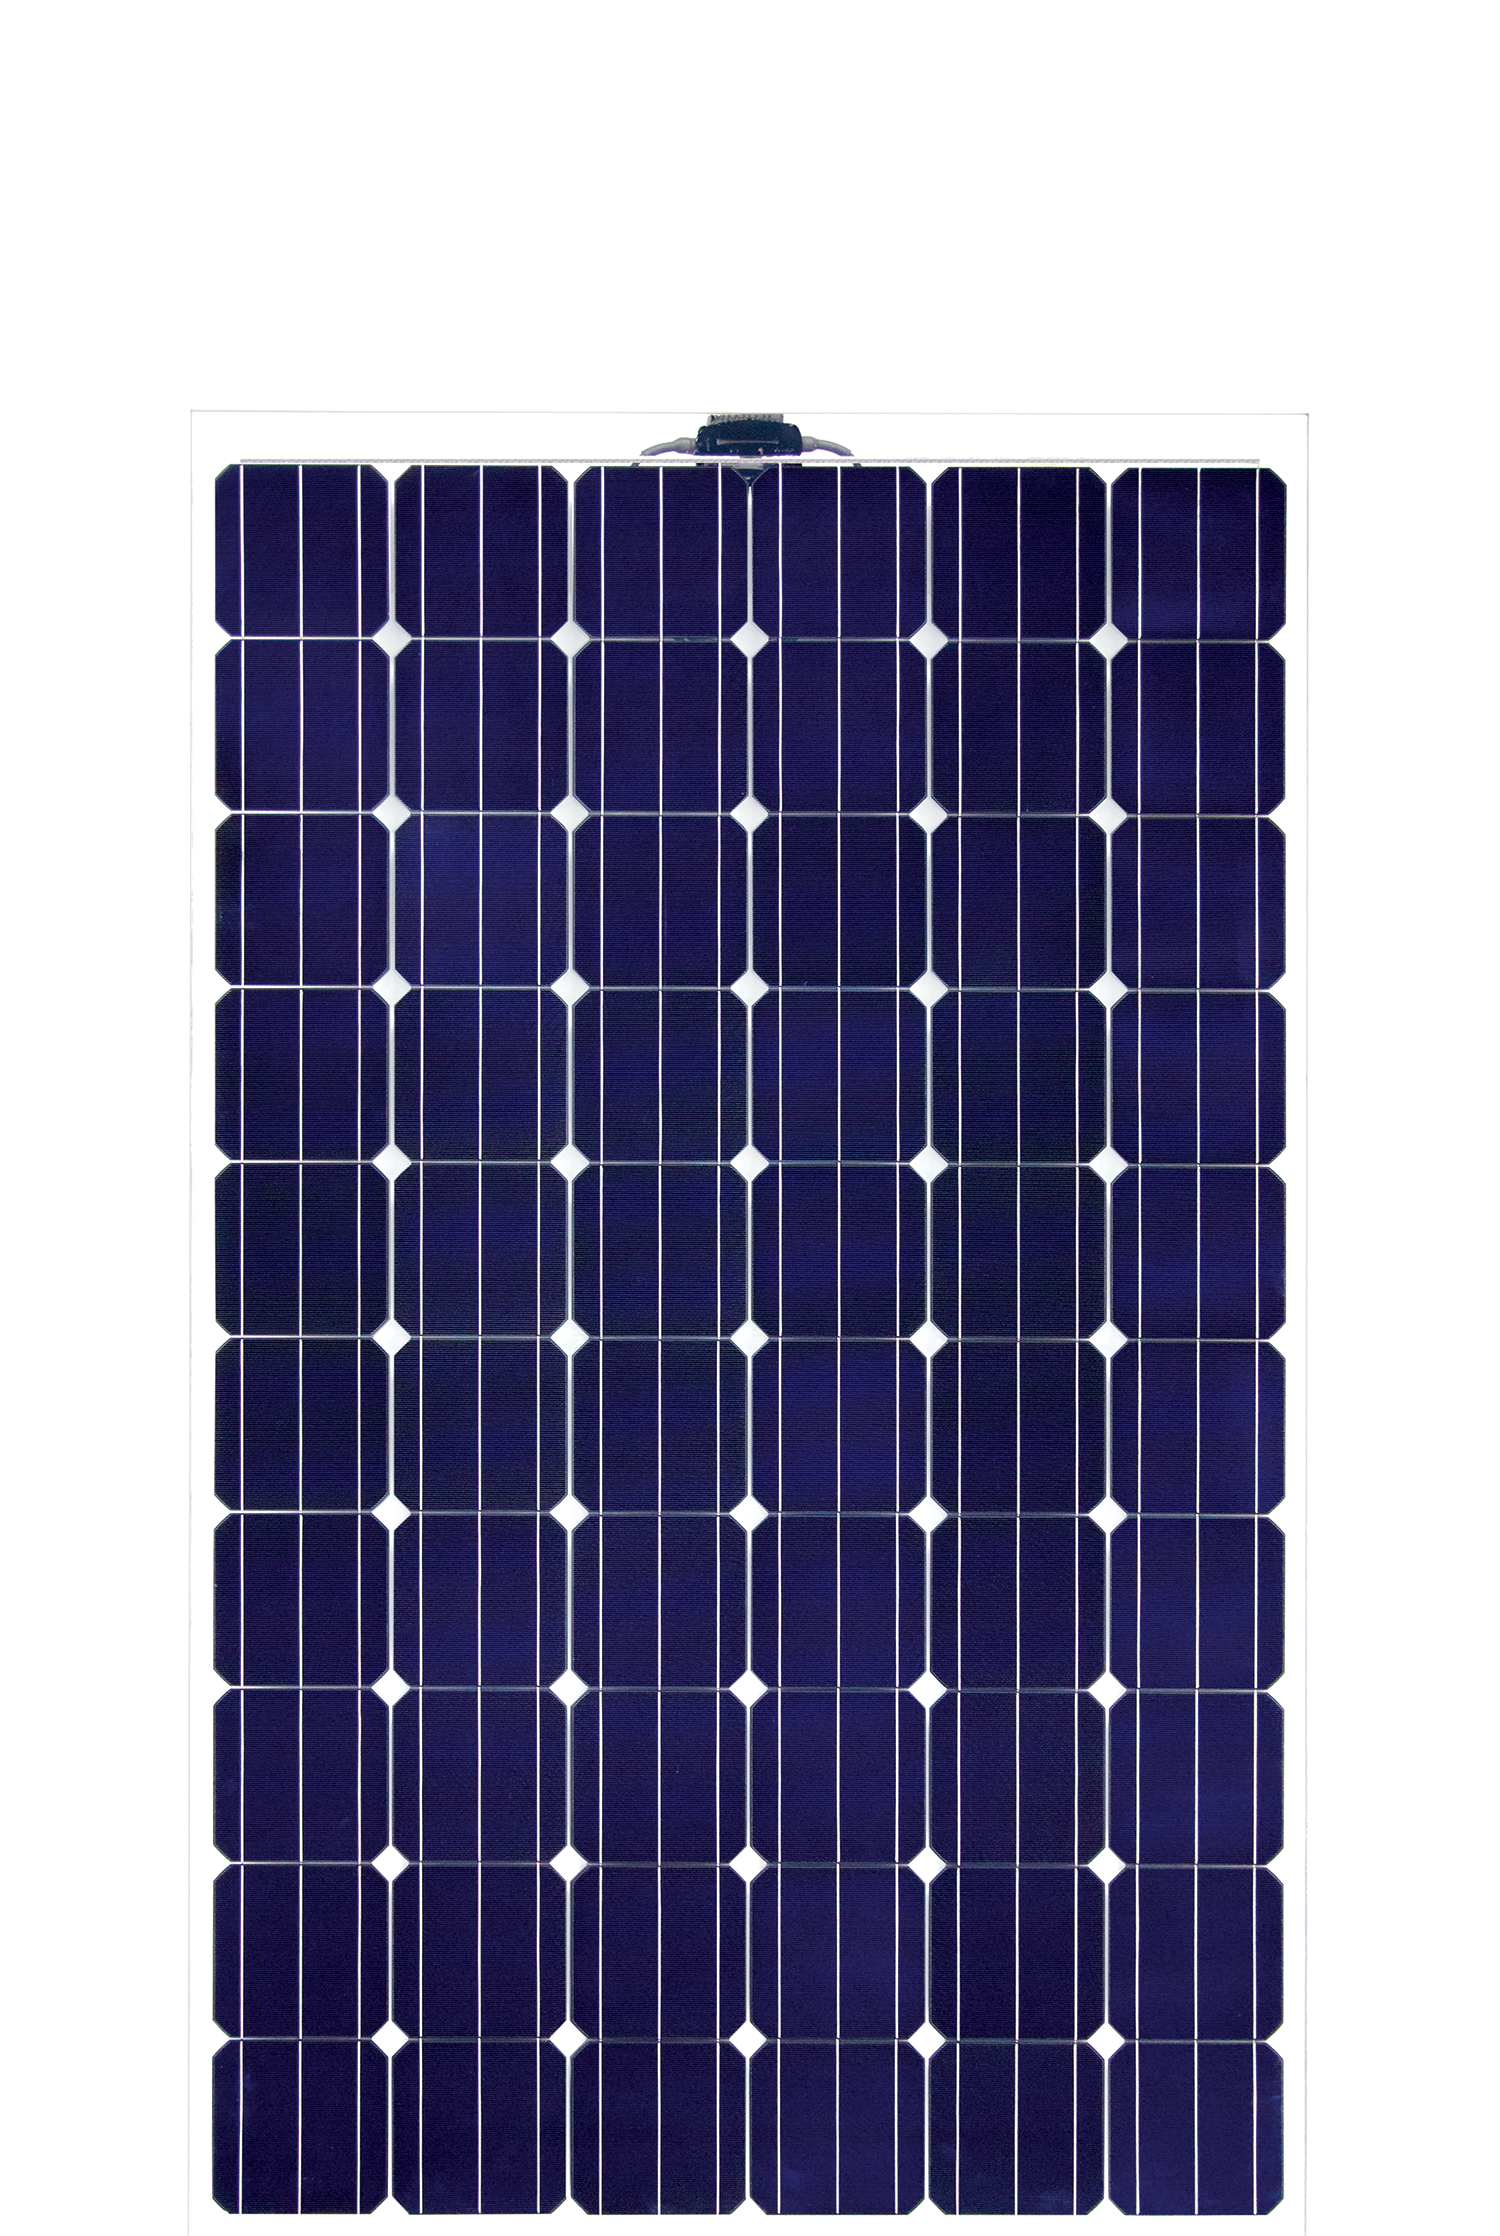 Sunpreme MAXIMA GXB 310 solar panel